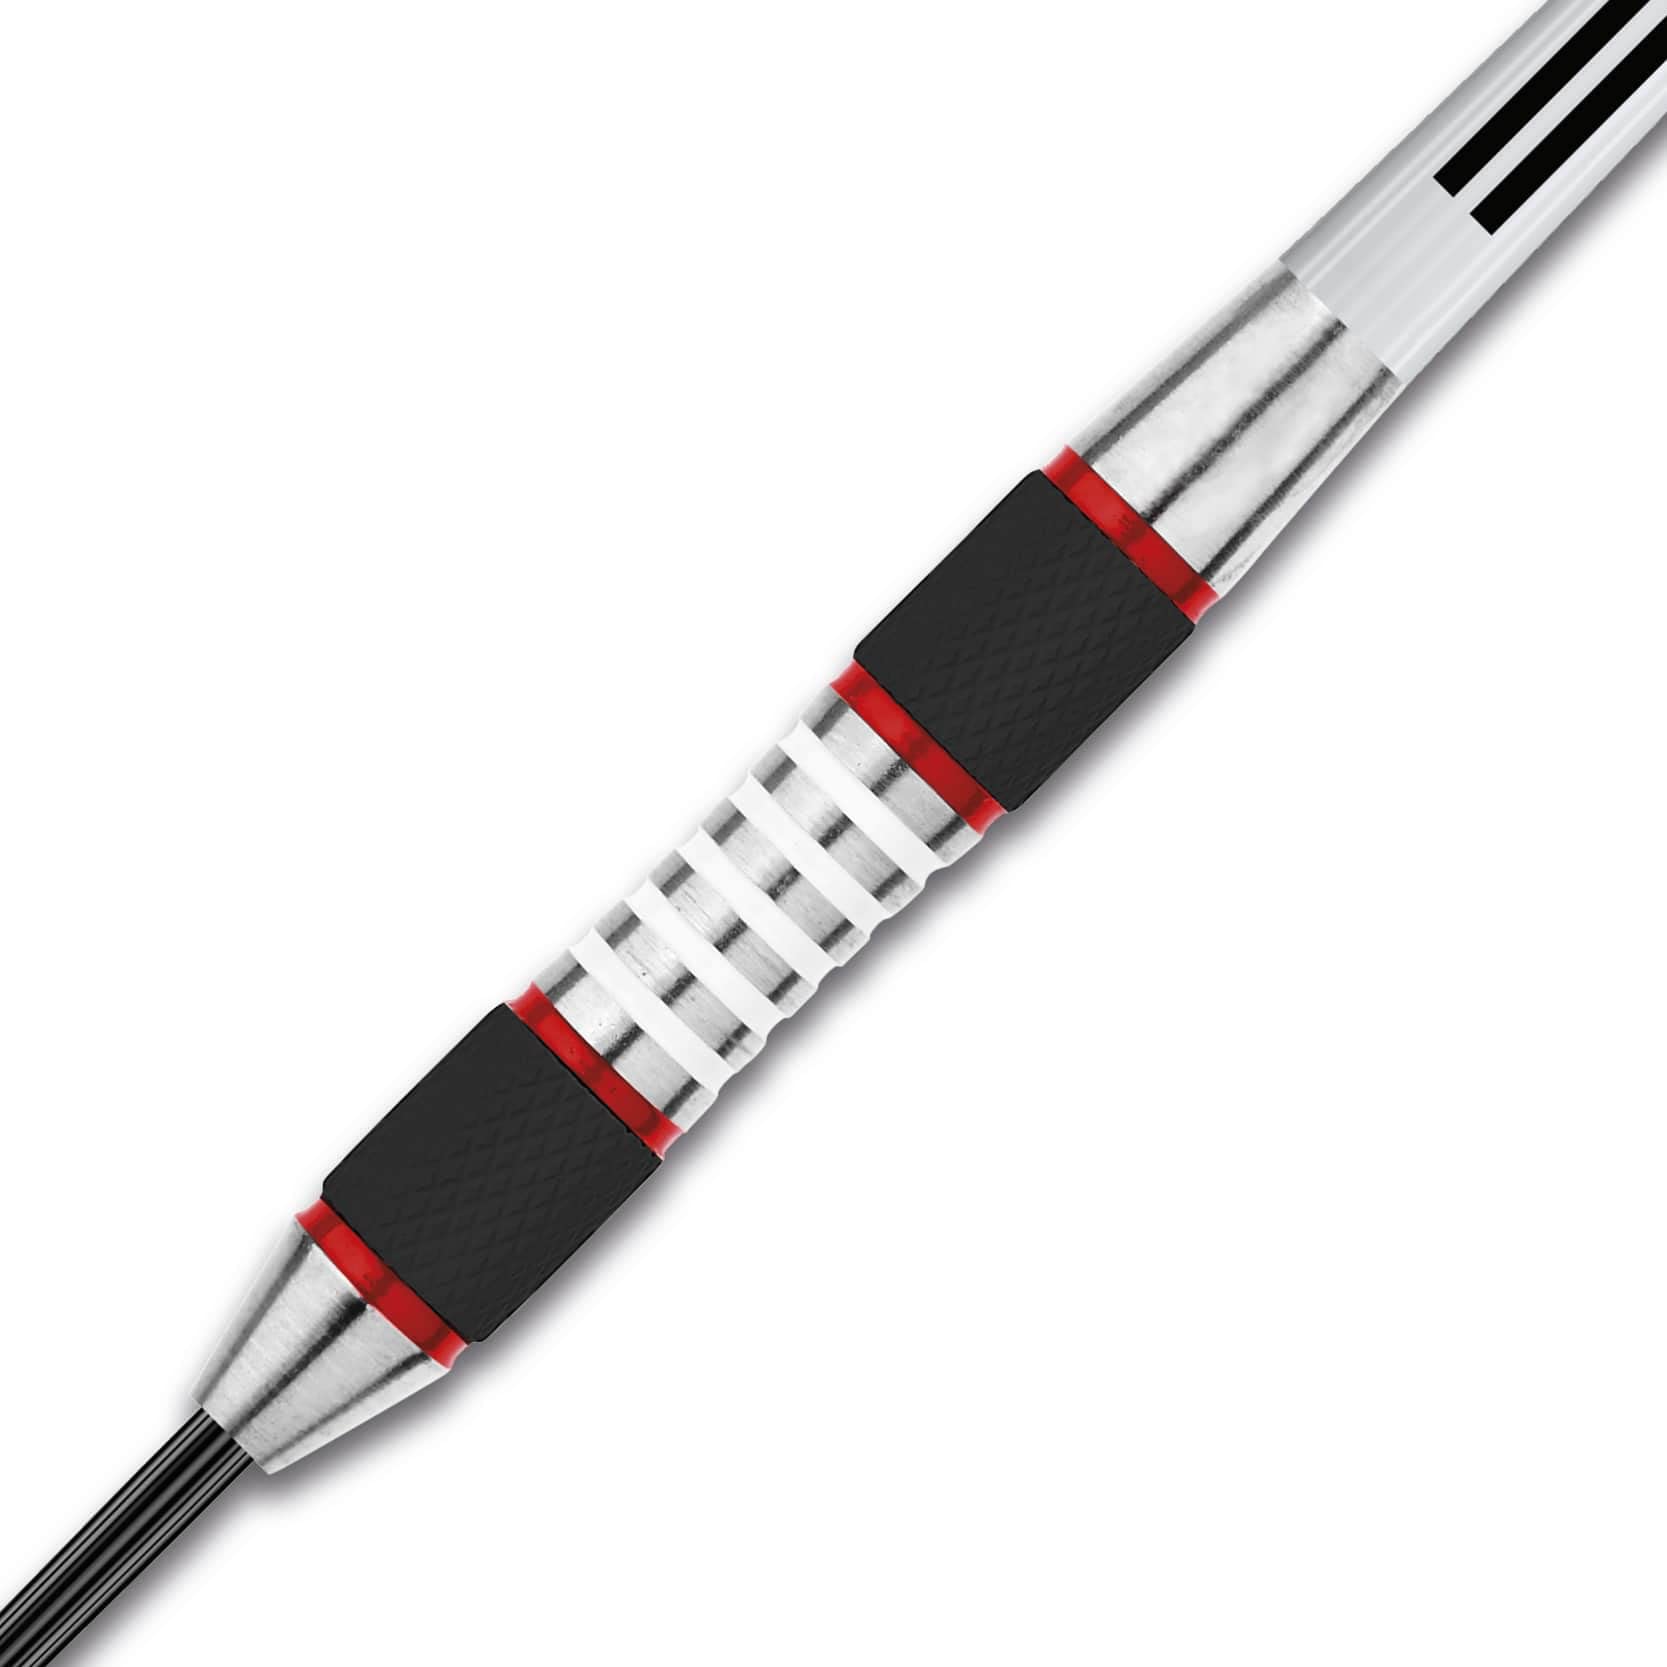 RED DRAGON Evos Tungsten Steeltip Darts Set - 24g with Flights, Stems and Wallet